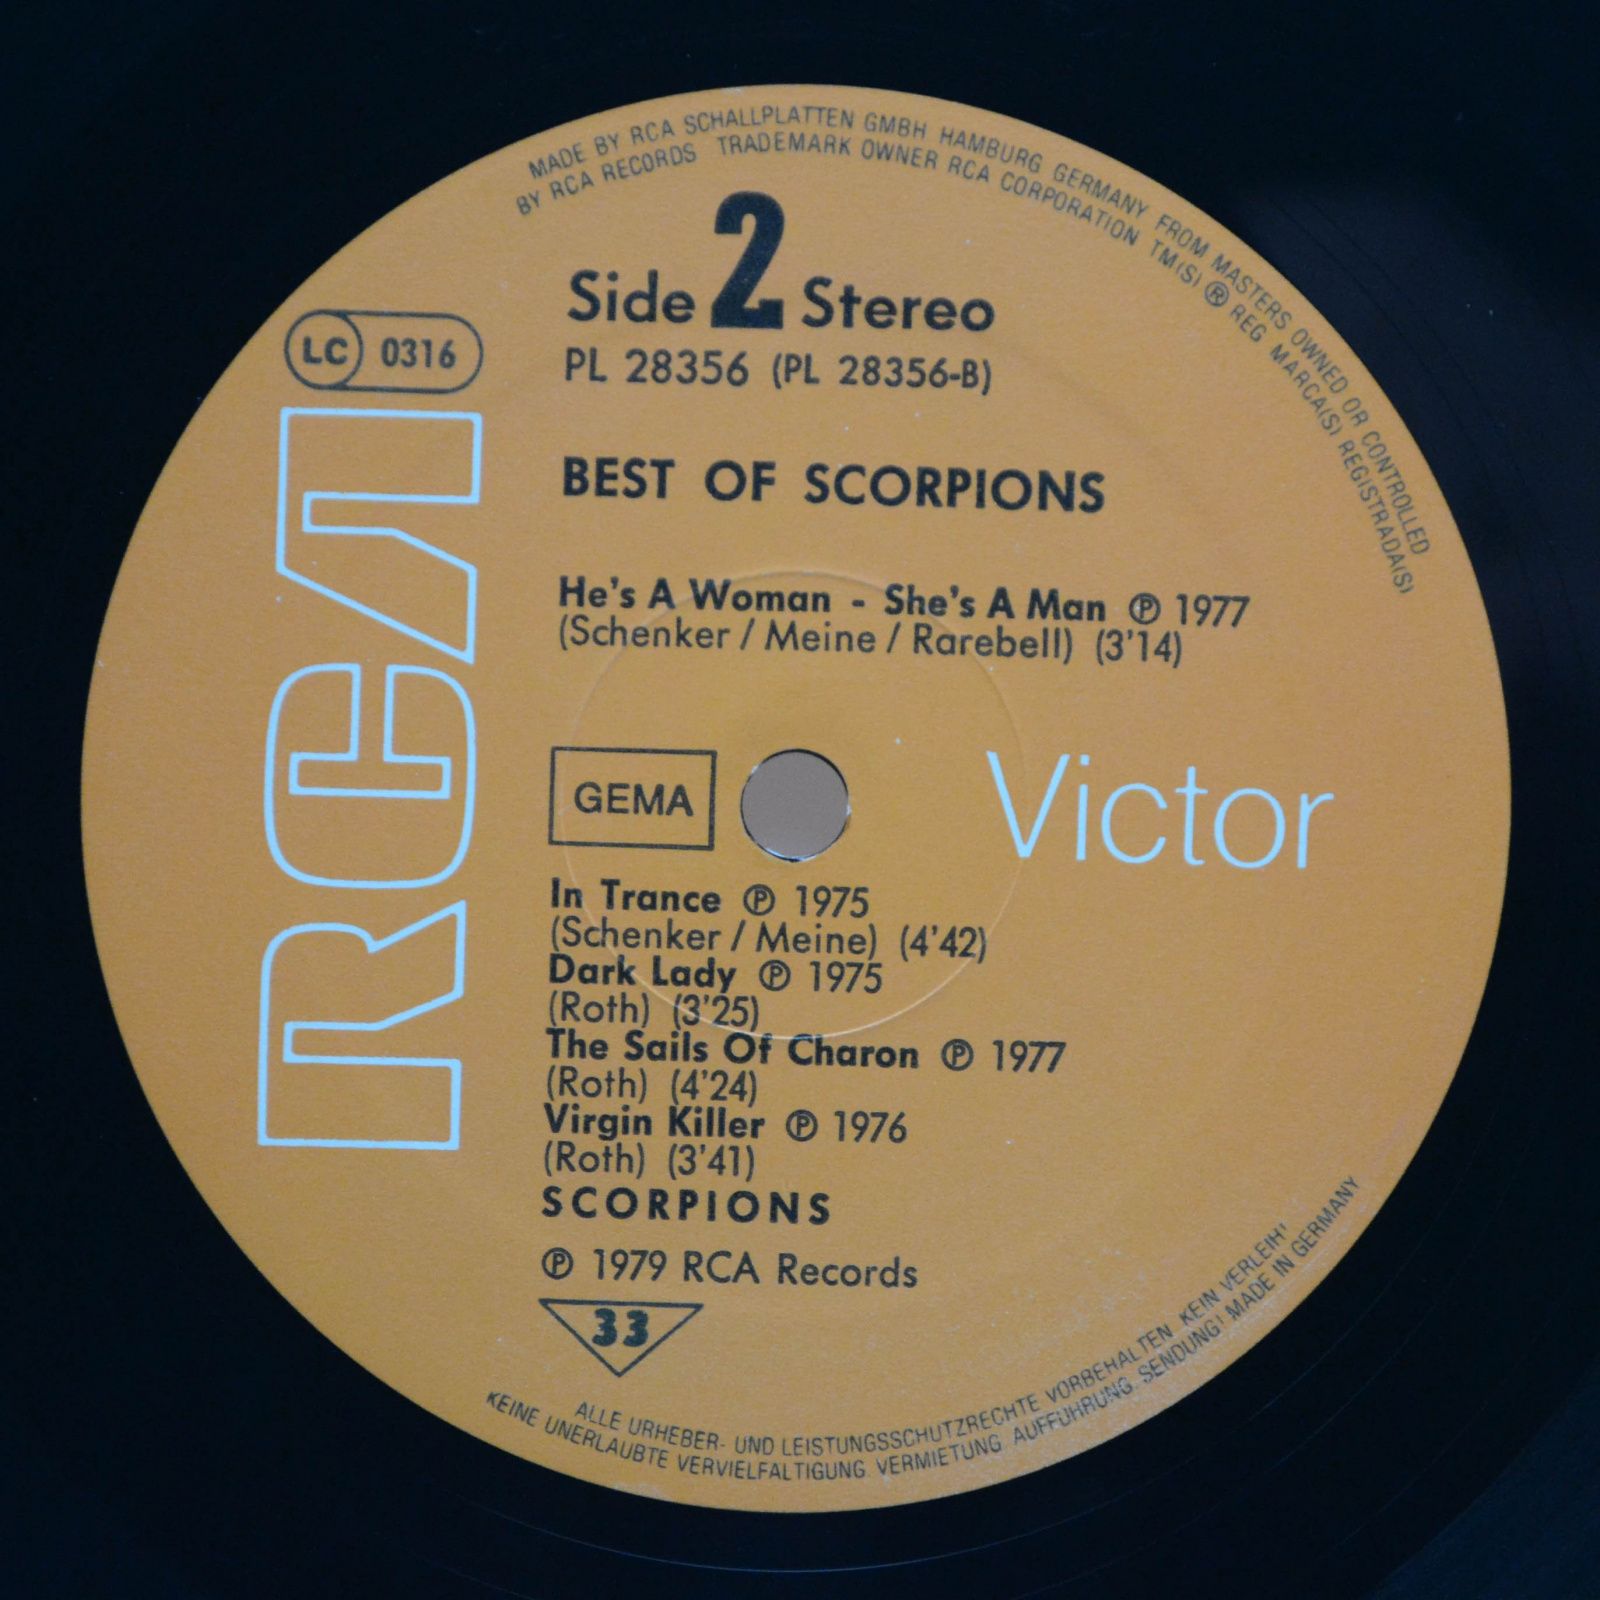 Scorpions — Best Of Scorpions, 1979